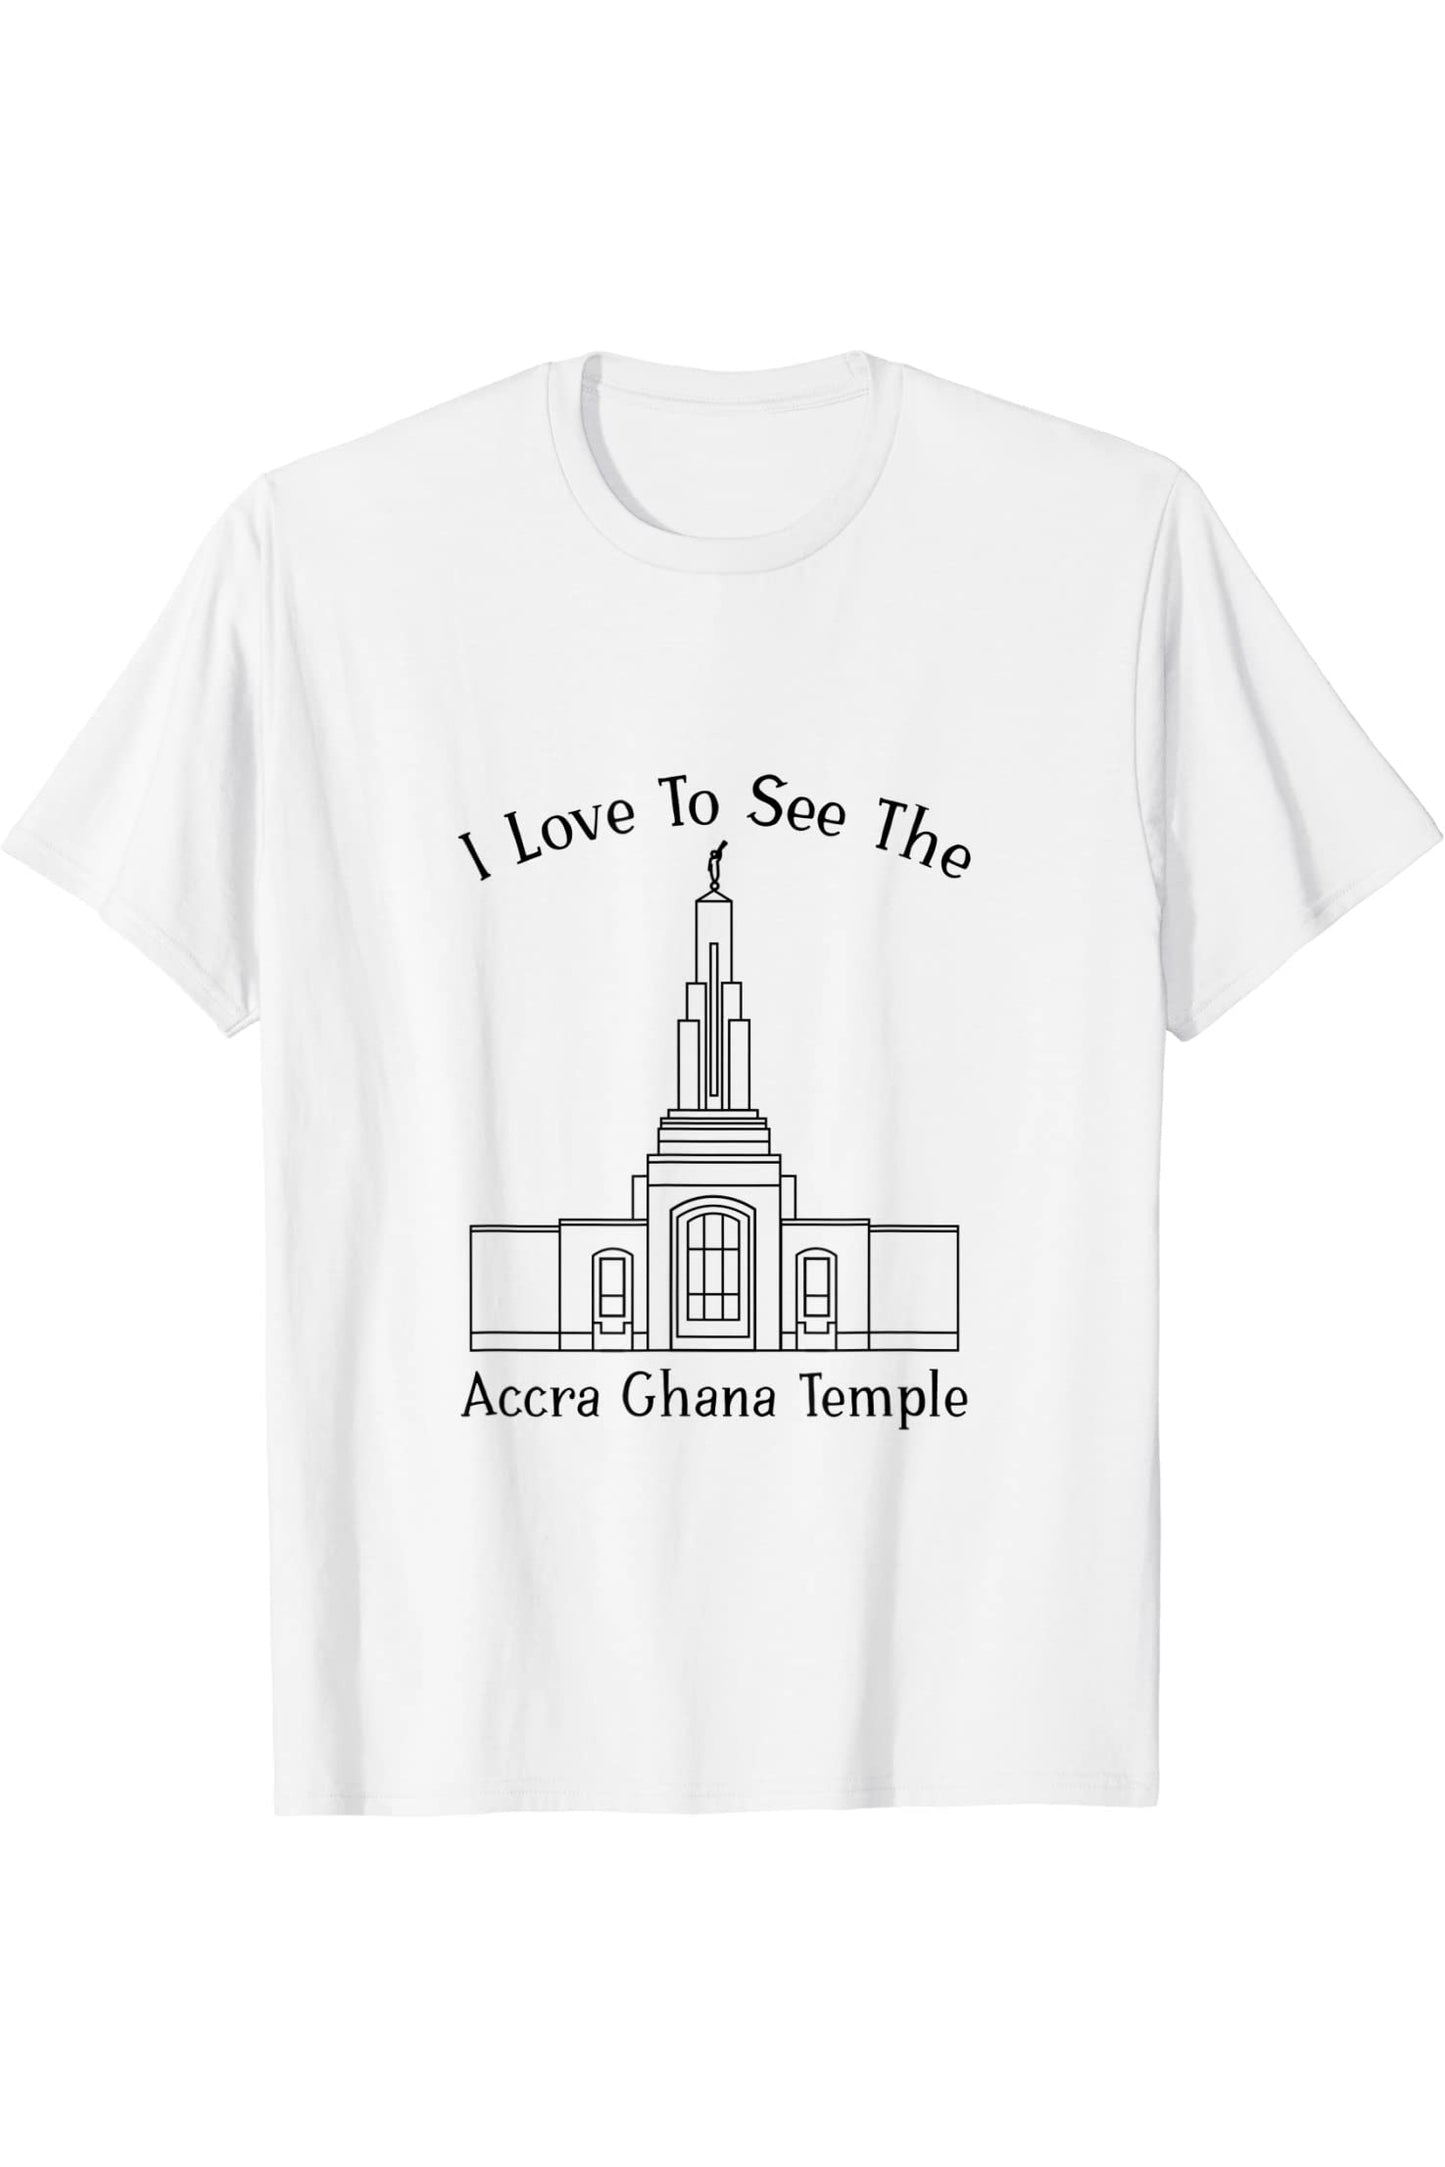 Accra Ghana Temple T-Shirt - Happy Style (English) US